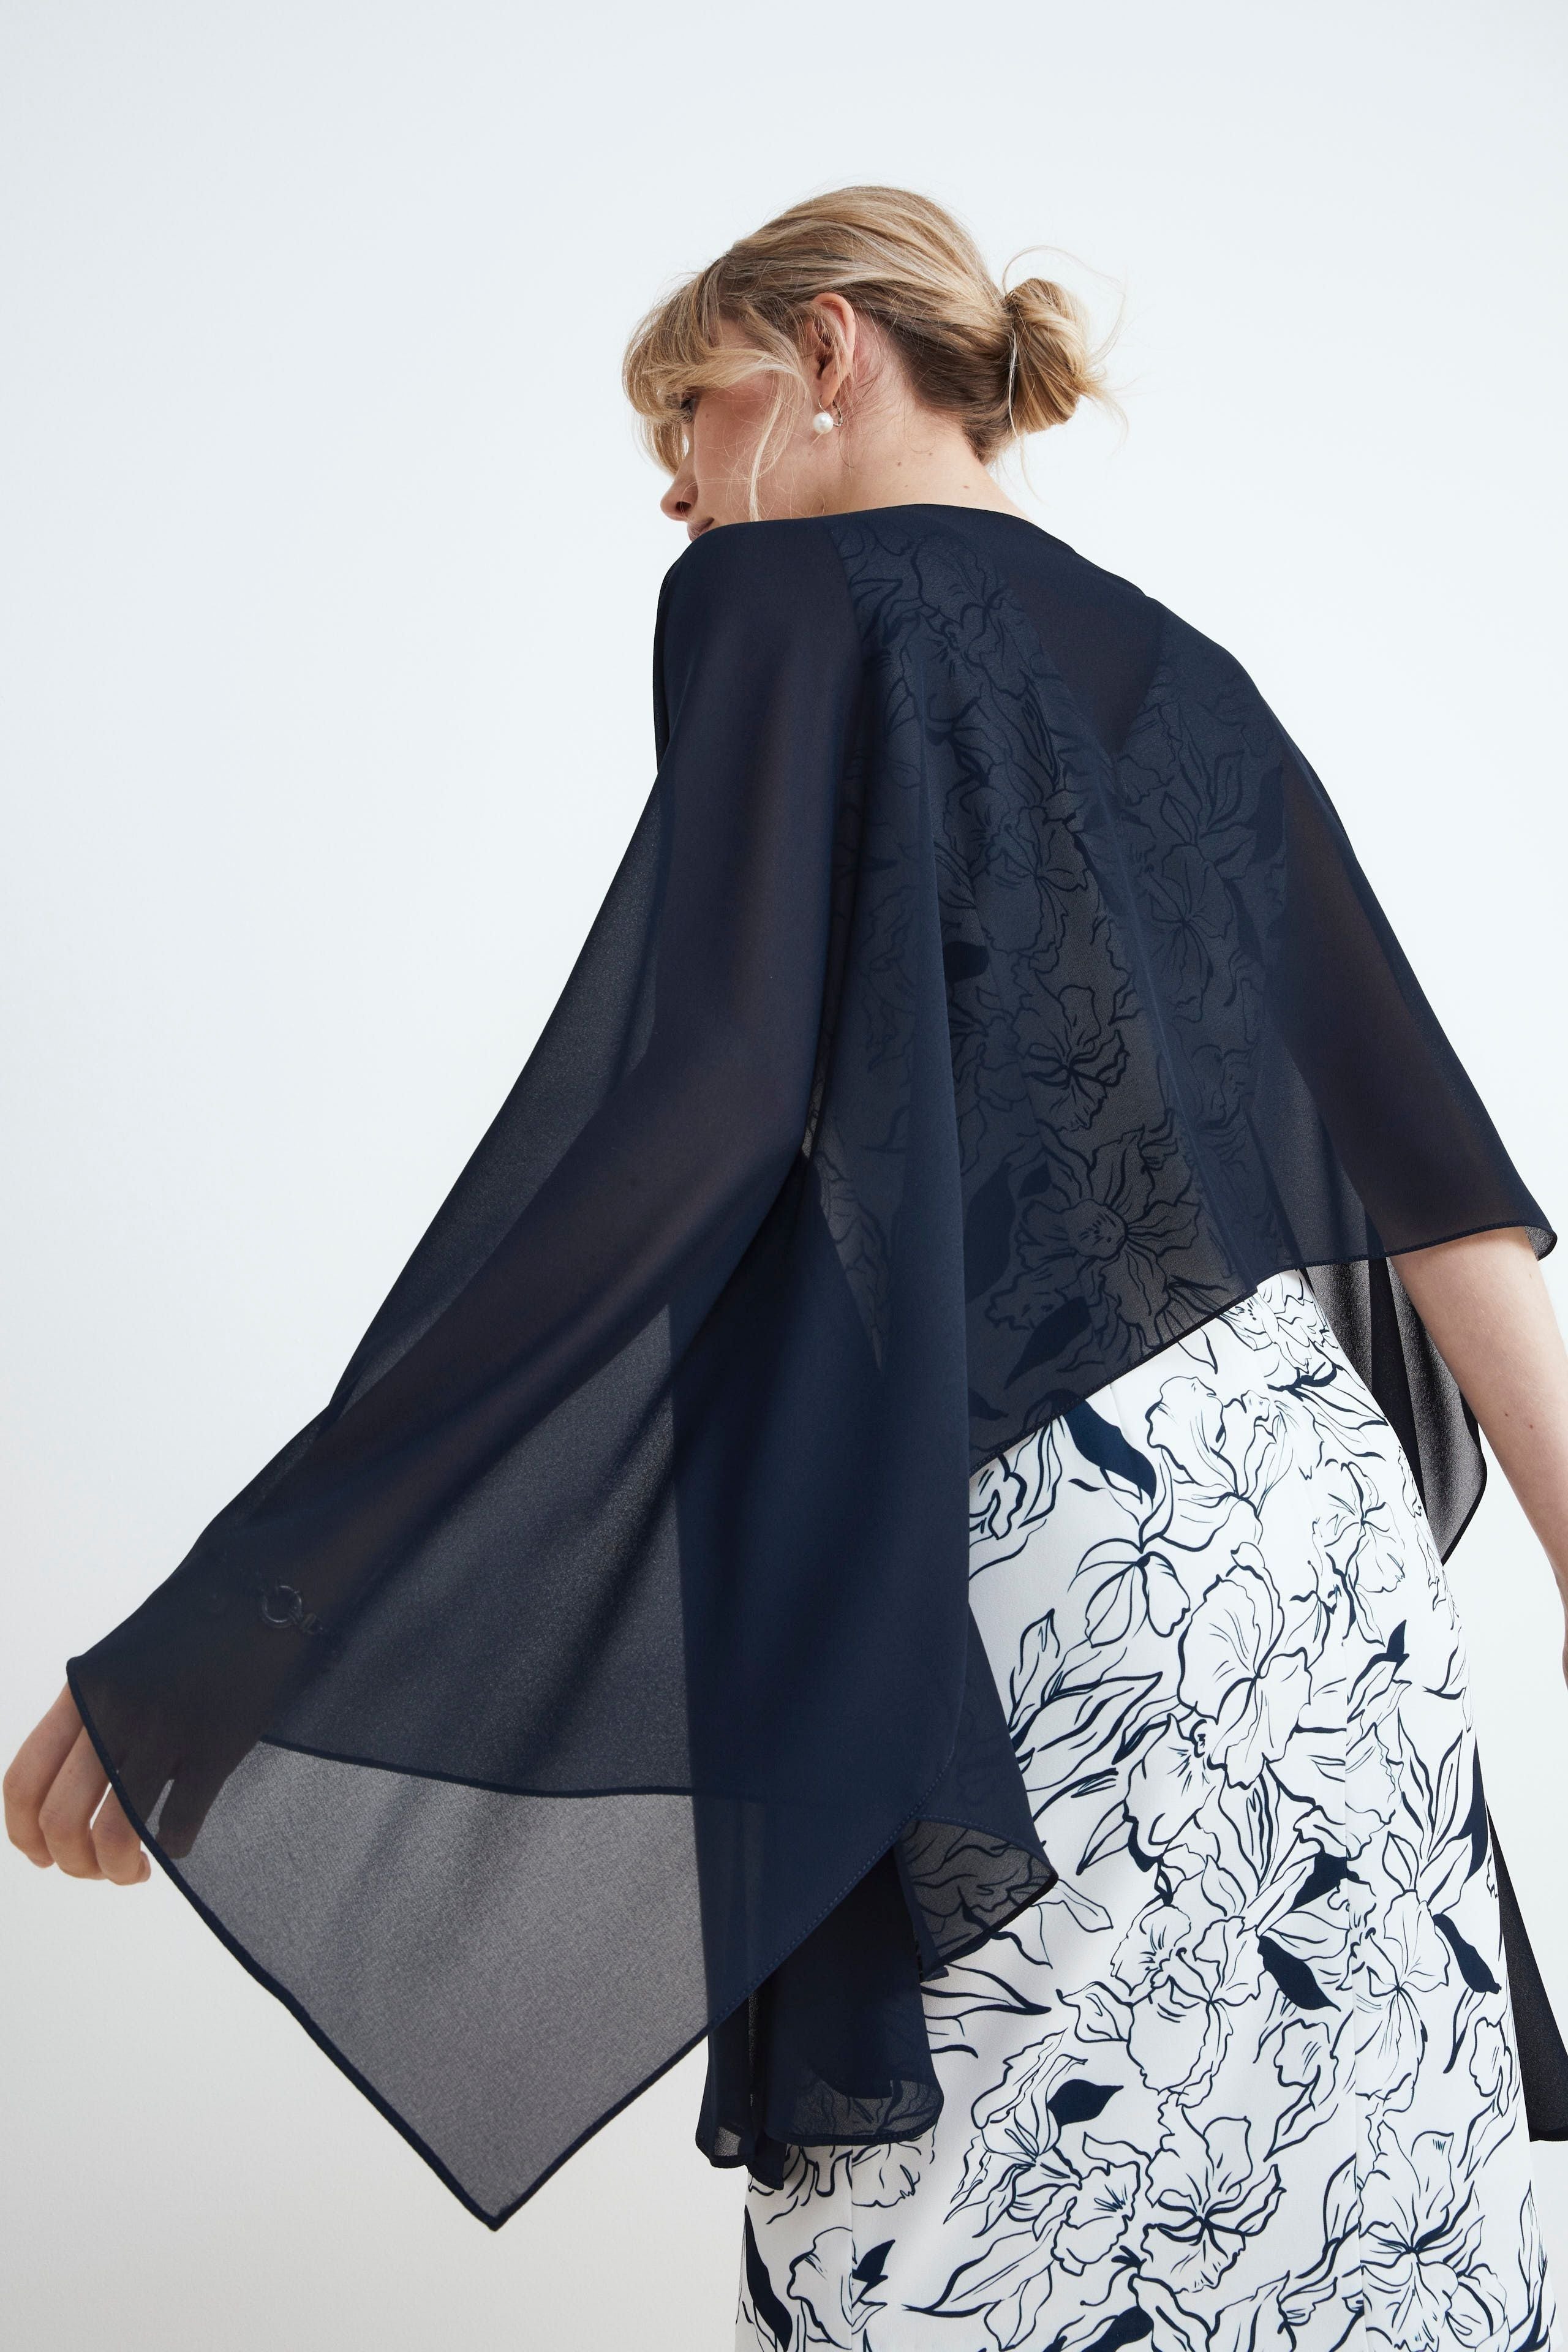 Elegant shawl cover stole - BLUE